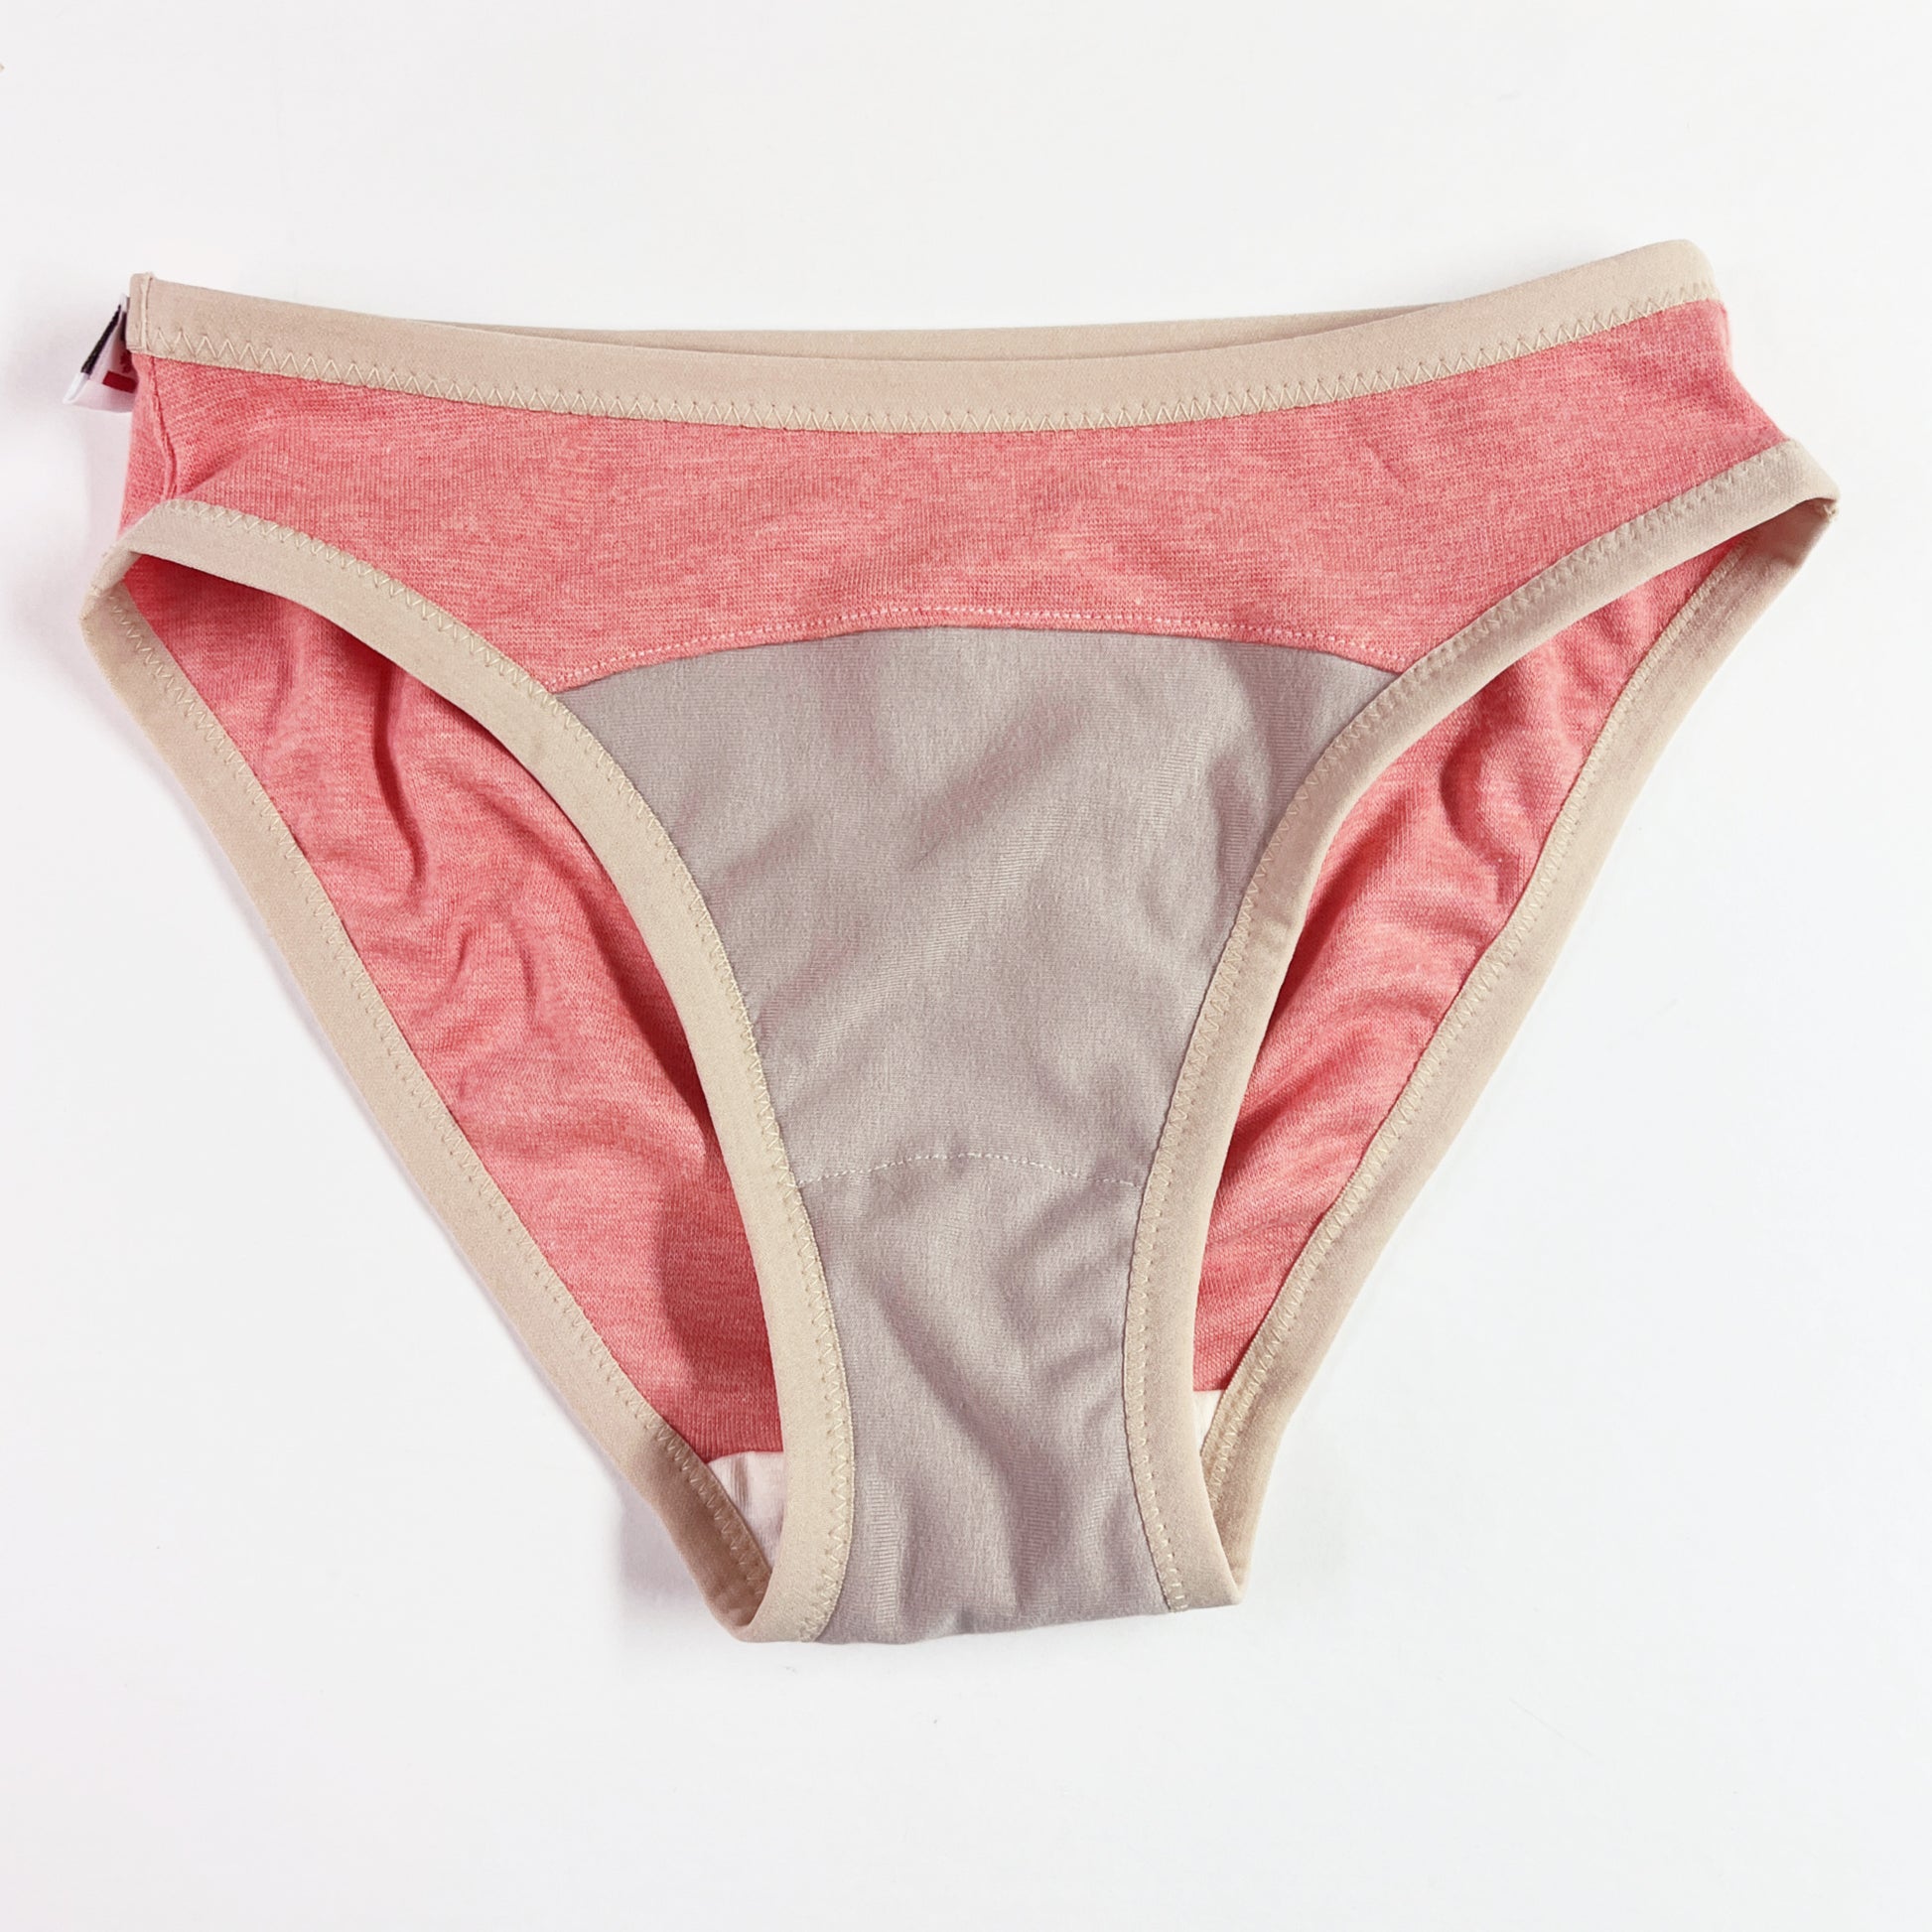 100% Organic Cotton Panties. Bikini String Low Rise. Sustainable